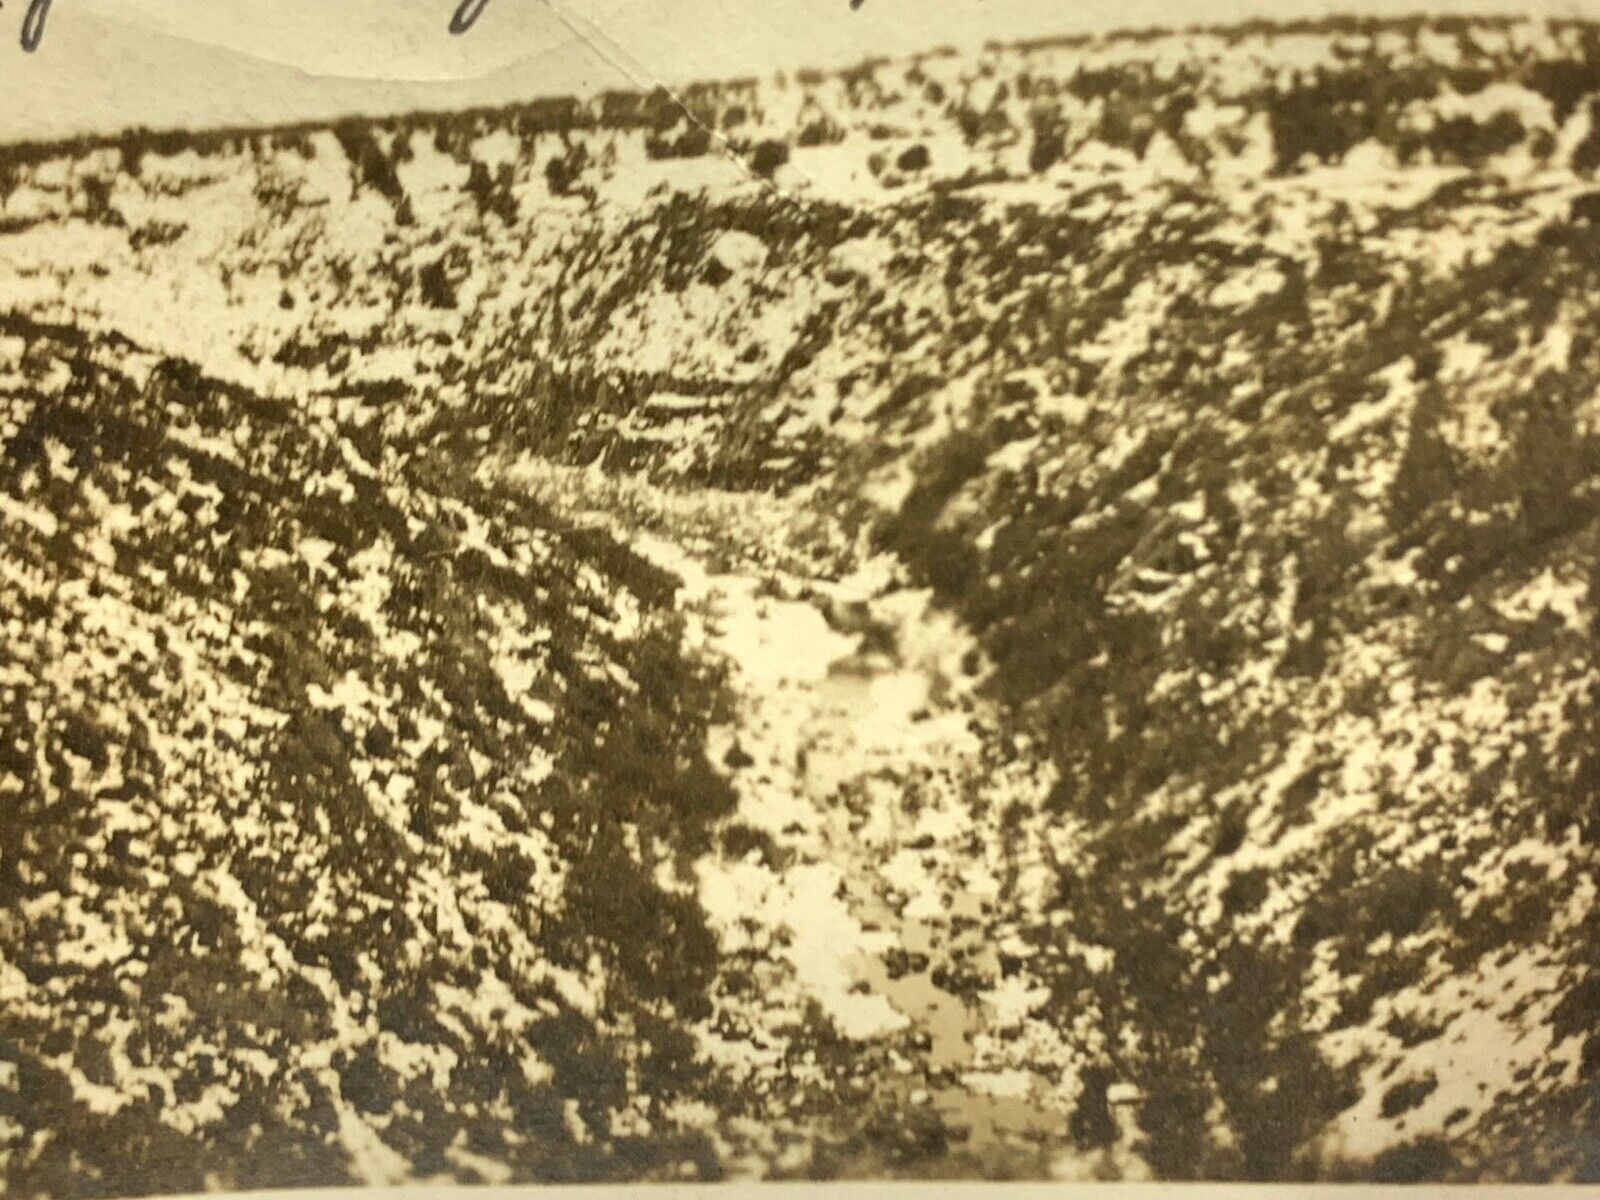 (AaE) FOUND PHOTO Photograph Snapshot Rare Early 1913 Hells Canyon Arizona AZ